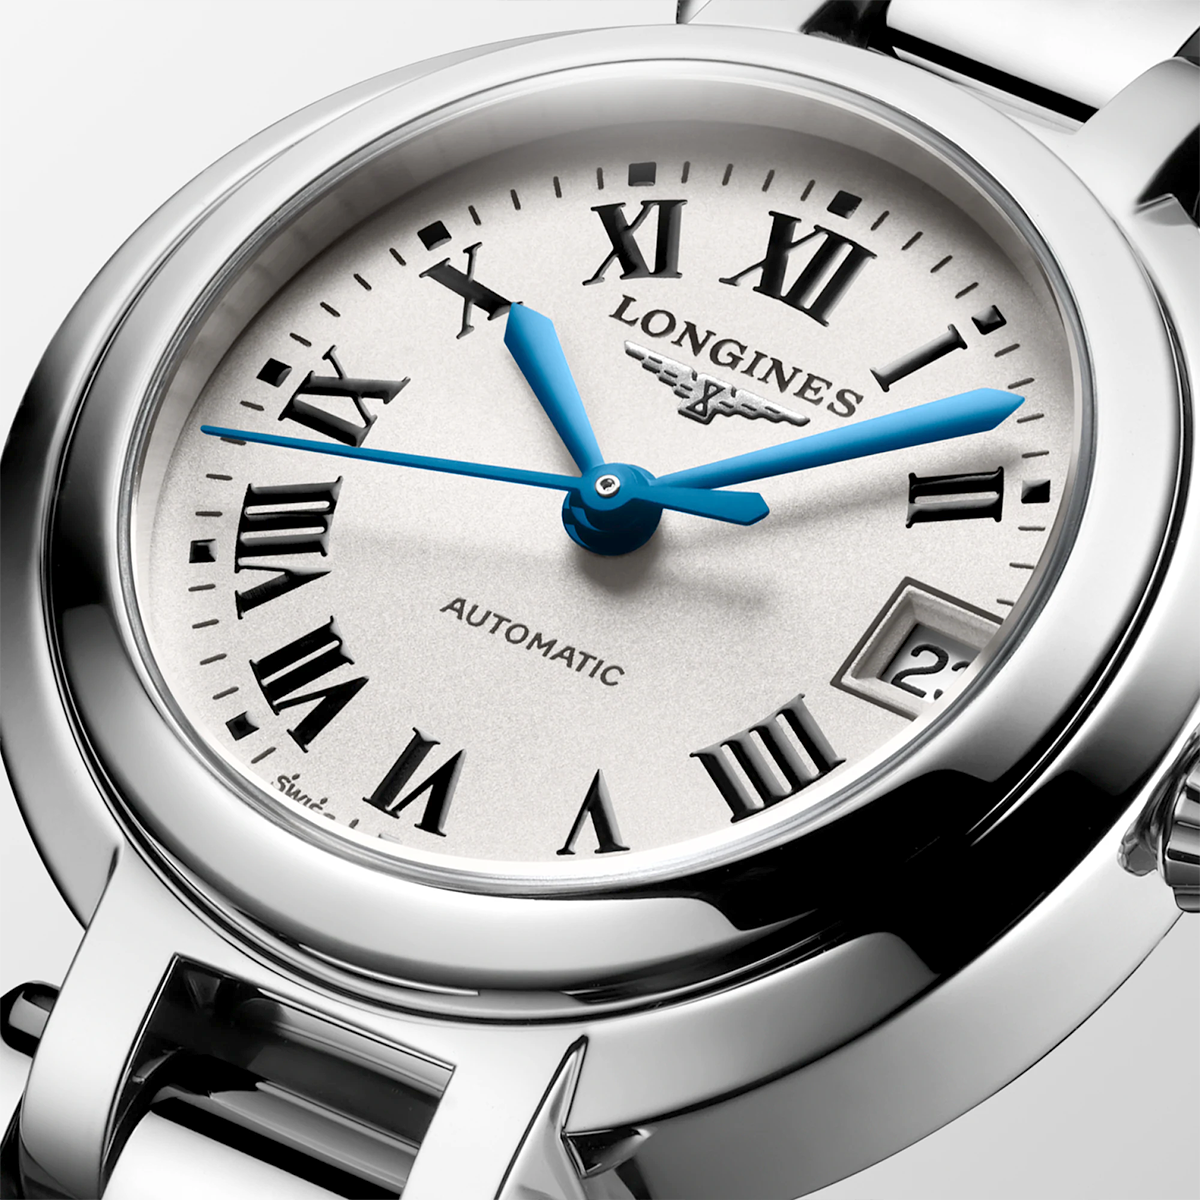 PrimaLuna 26.5mm Silver Roman Dial Ladies Automatic Watch